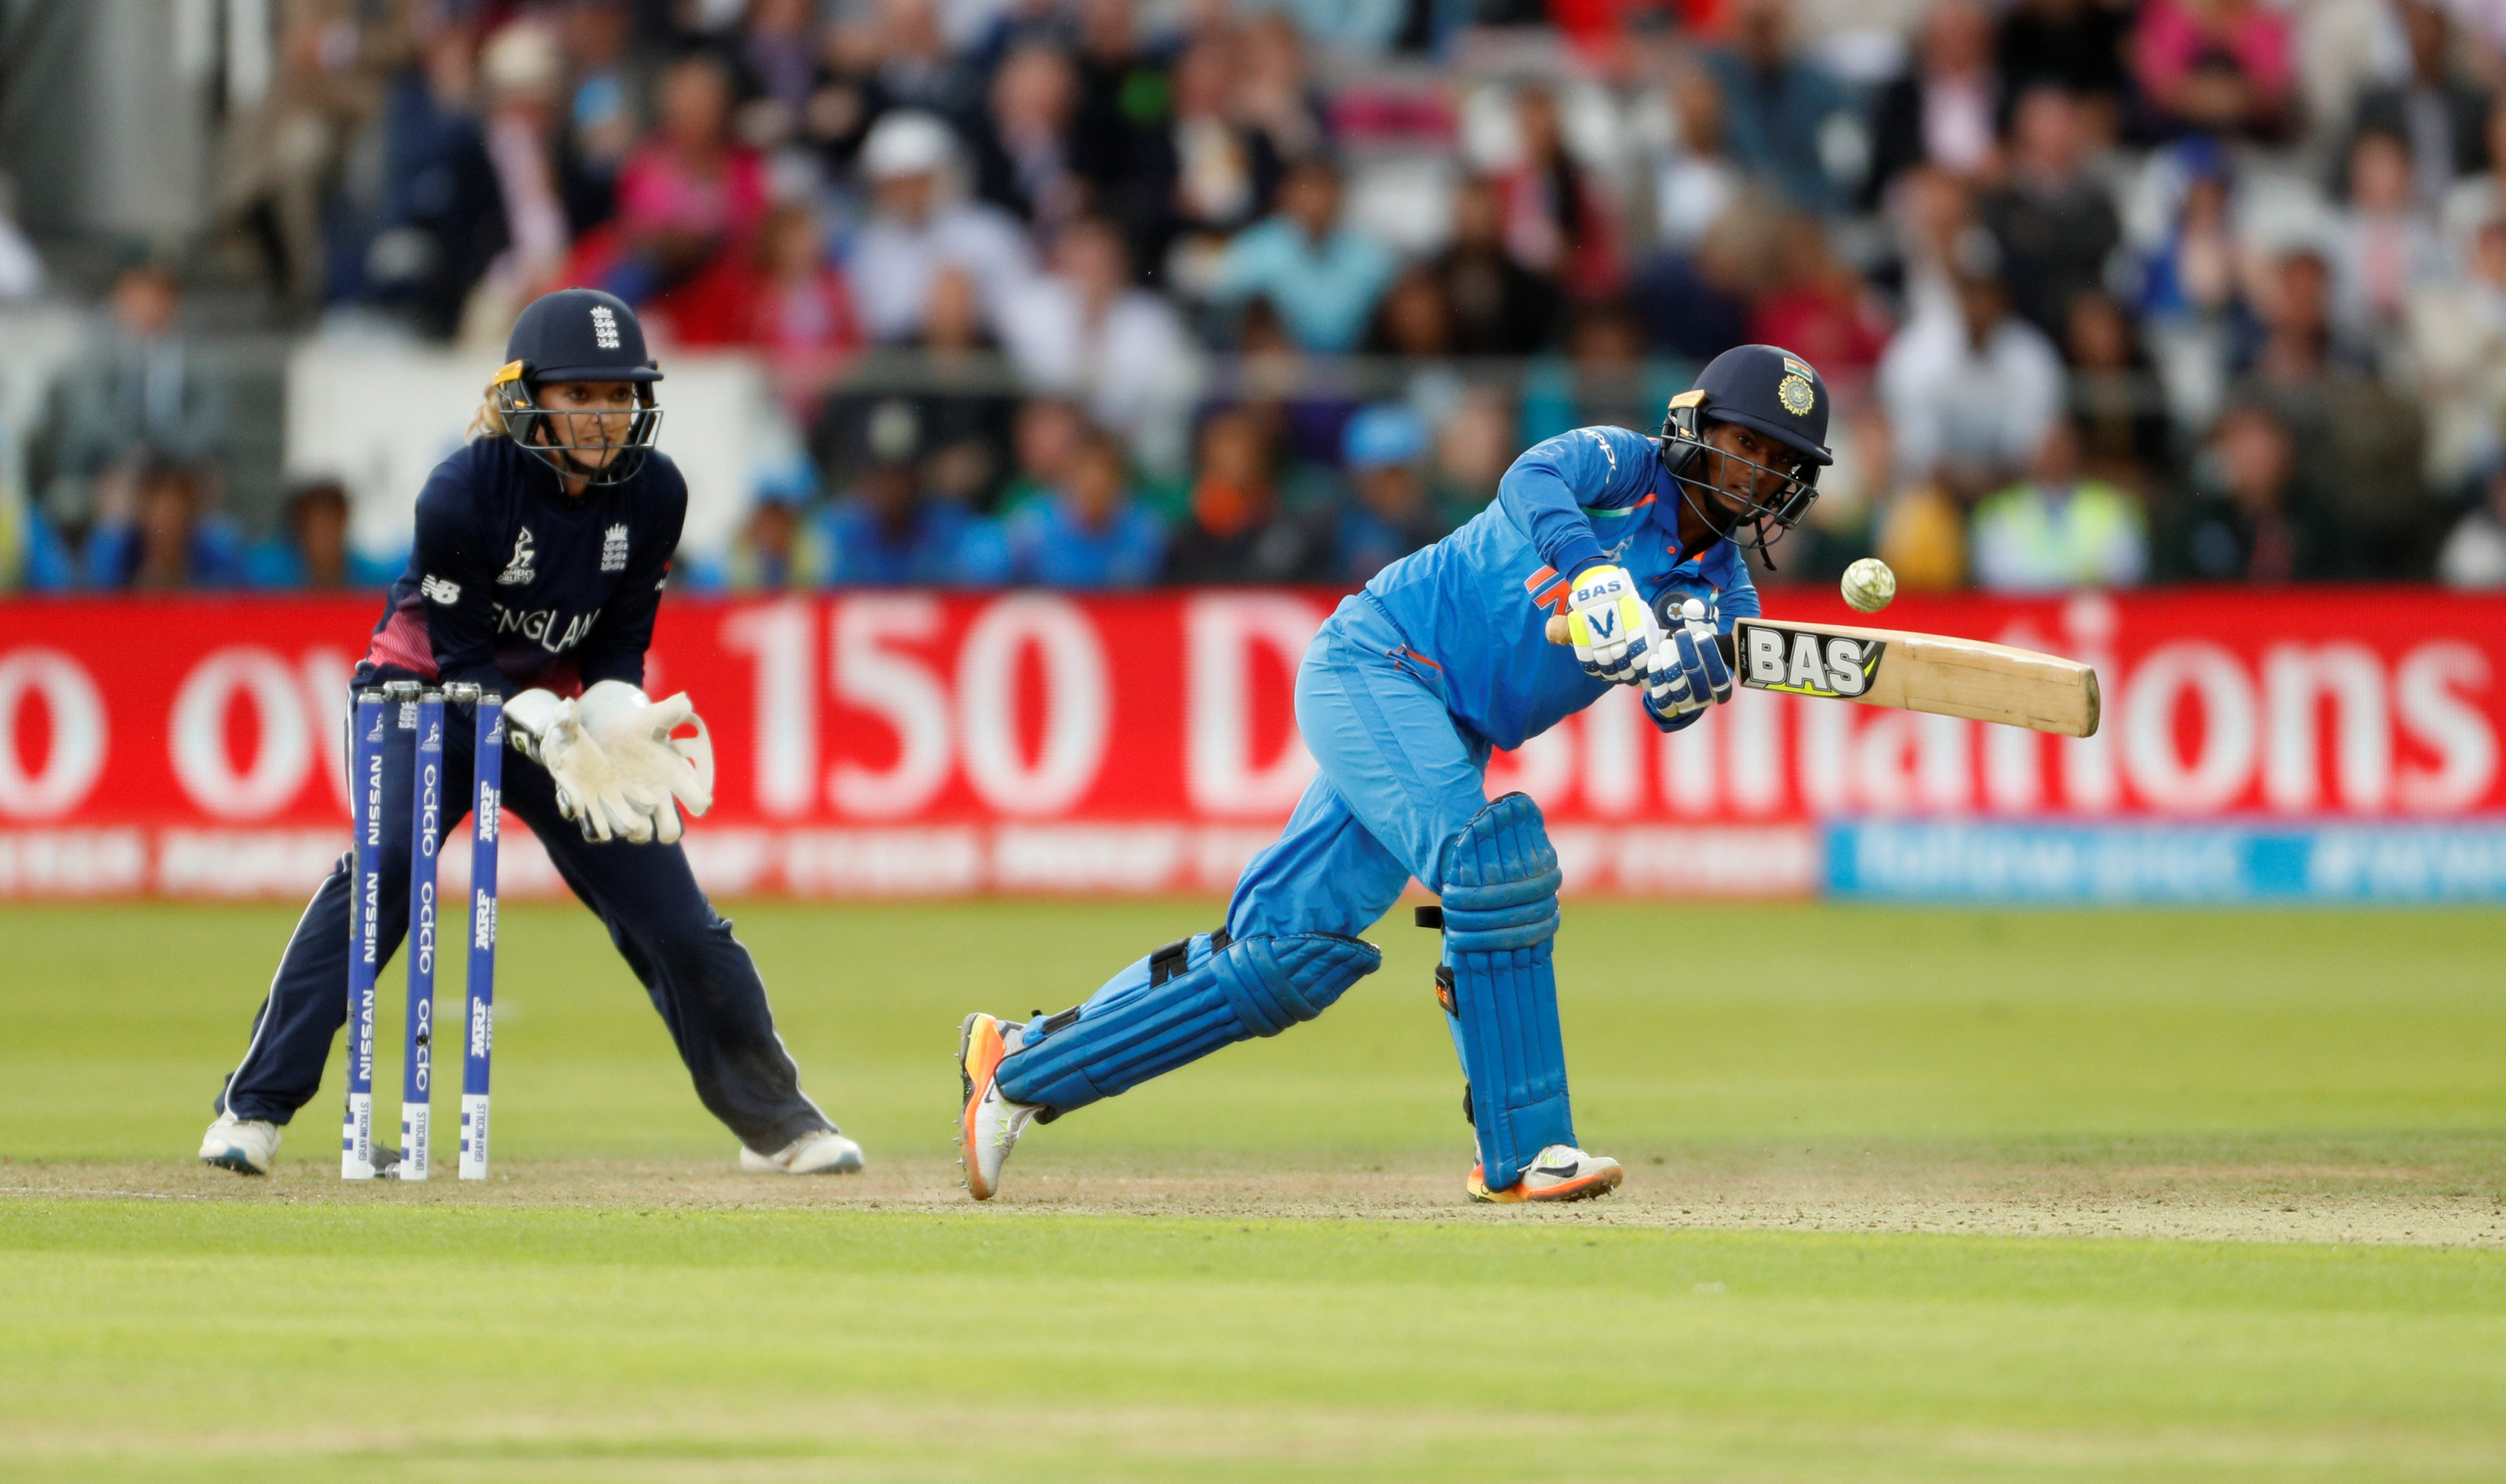 MCC changes 'batsman' to 'batter' in Laws of Cricket | Reuters